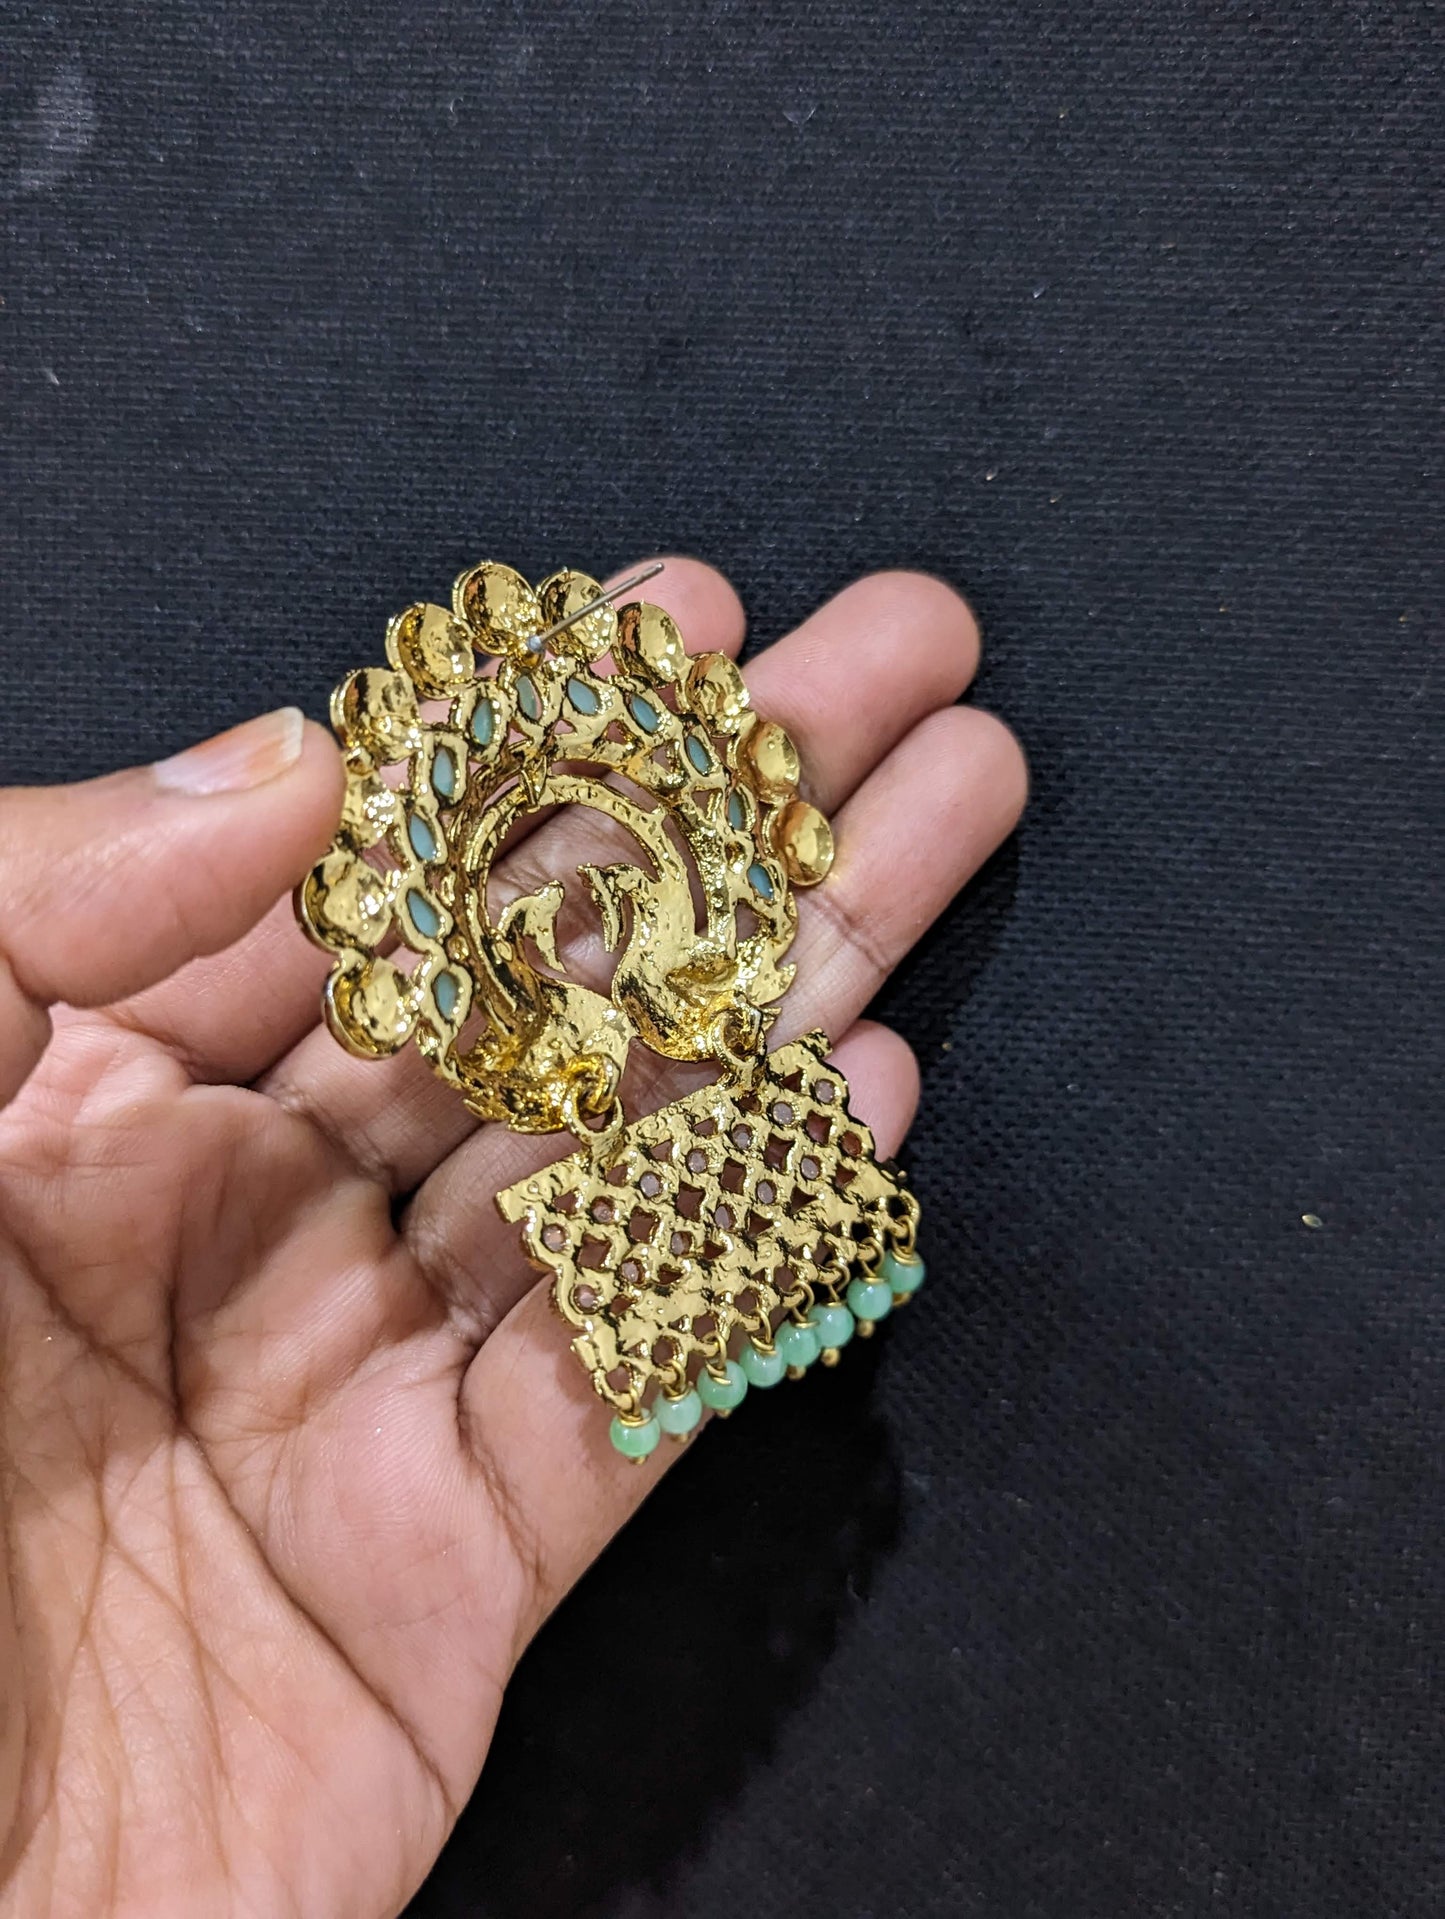 Mehandi Gold plated Large Chandbali Earrings